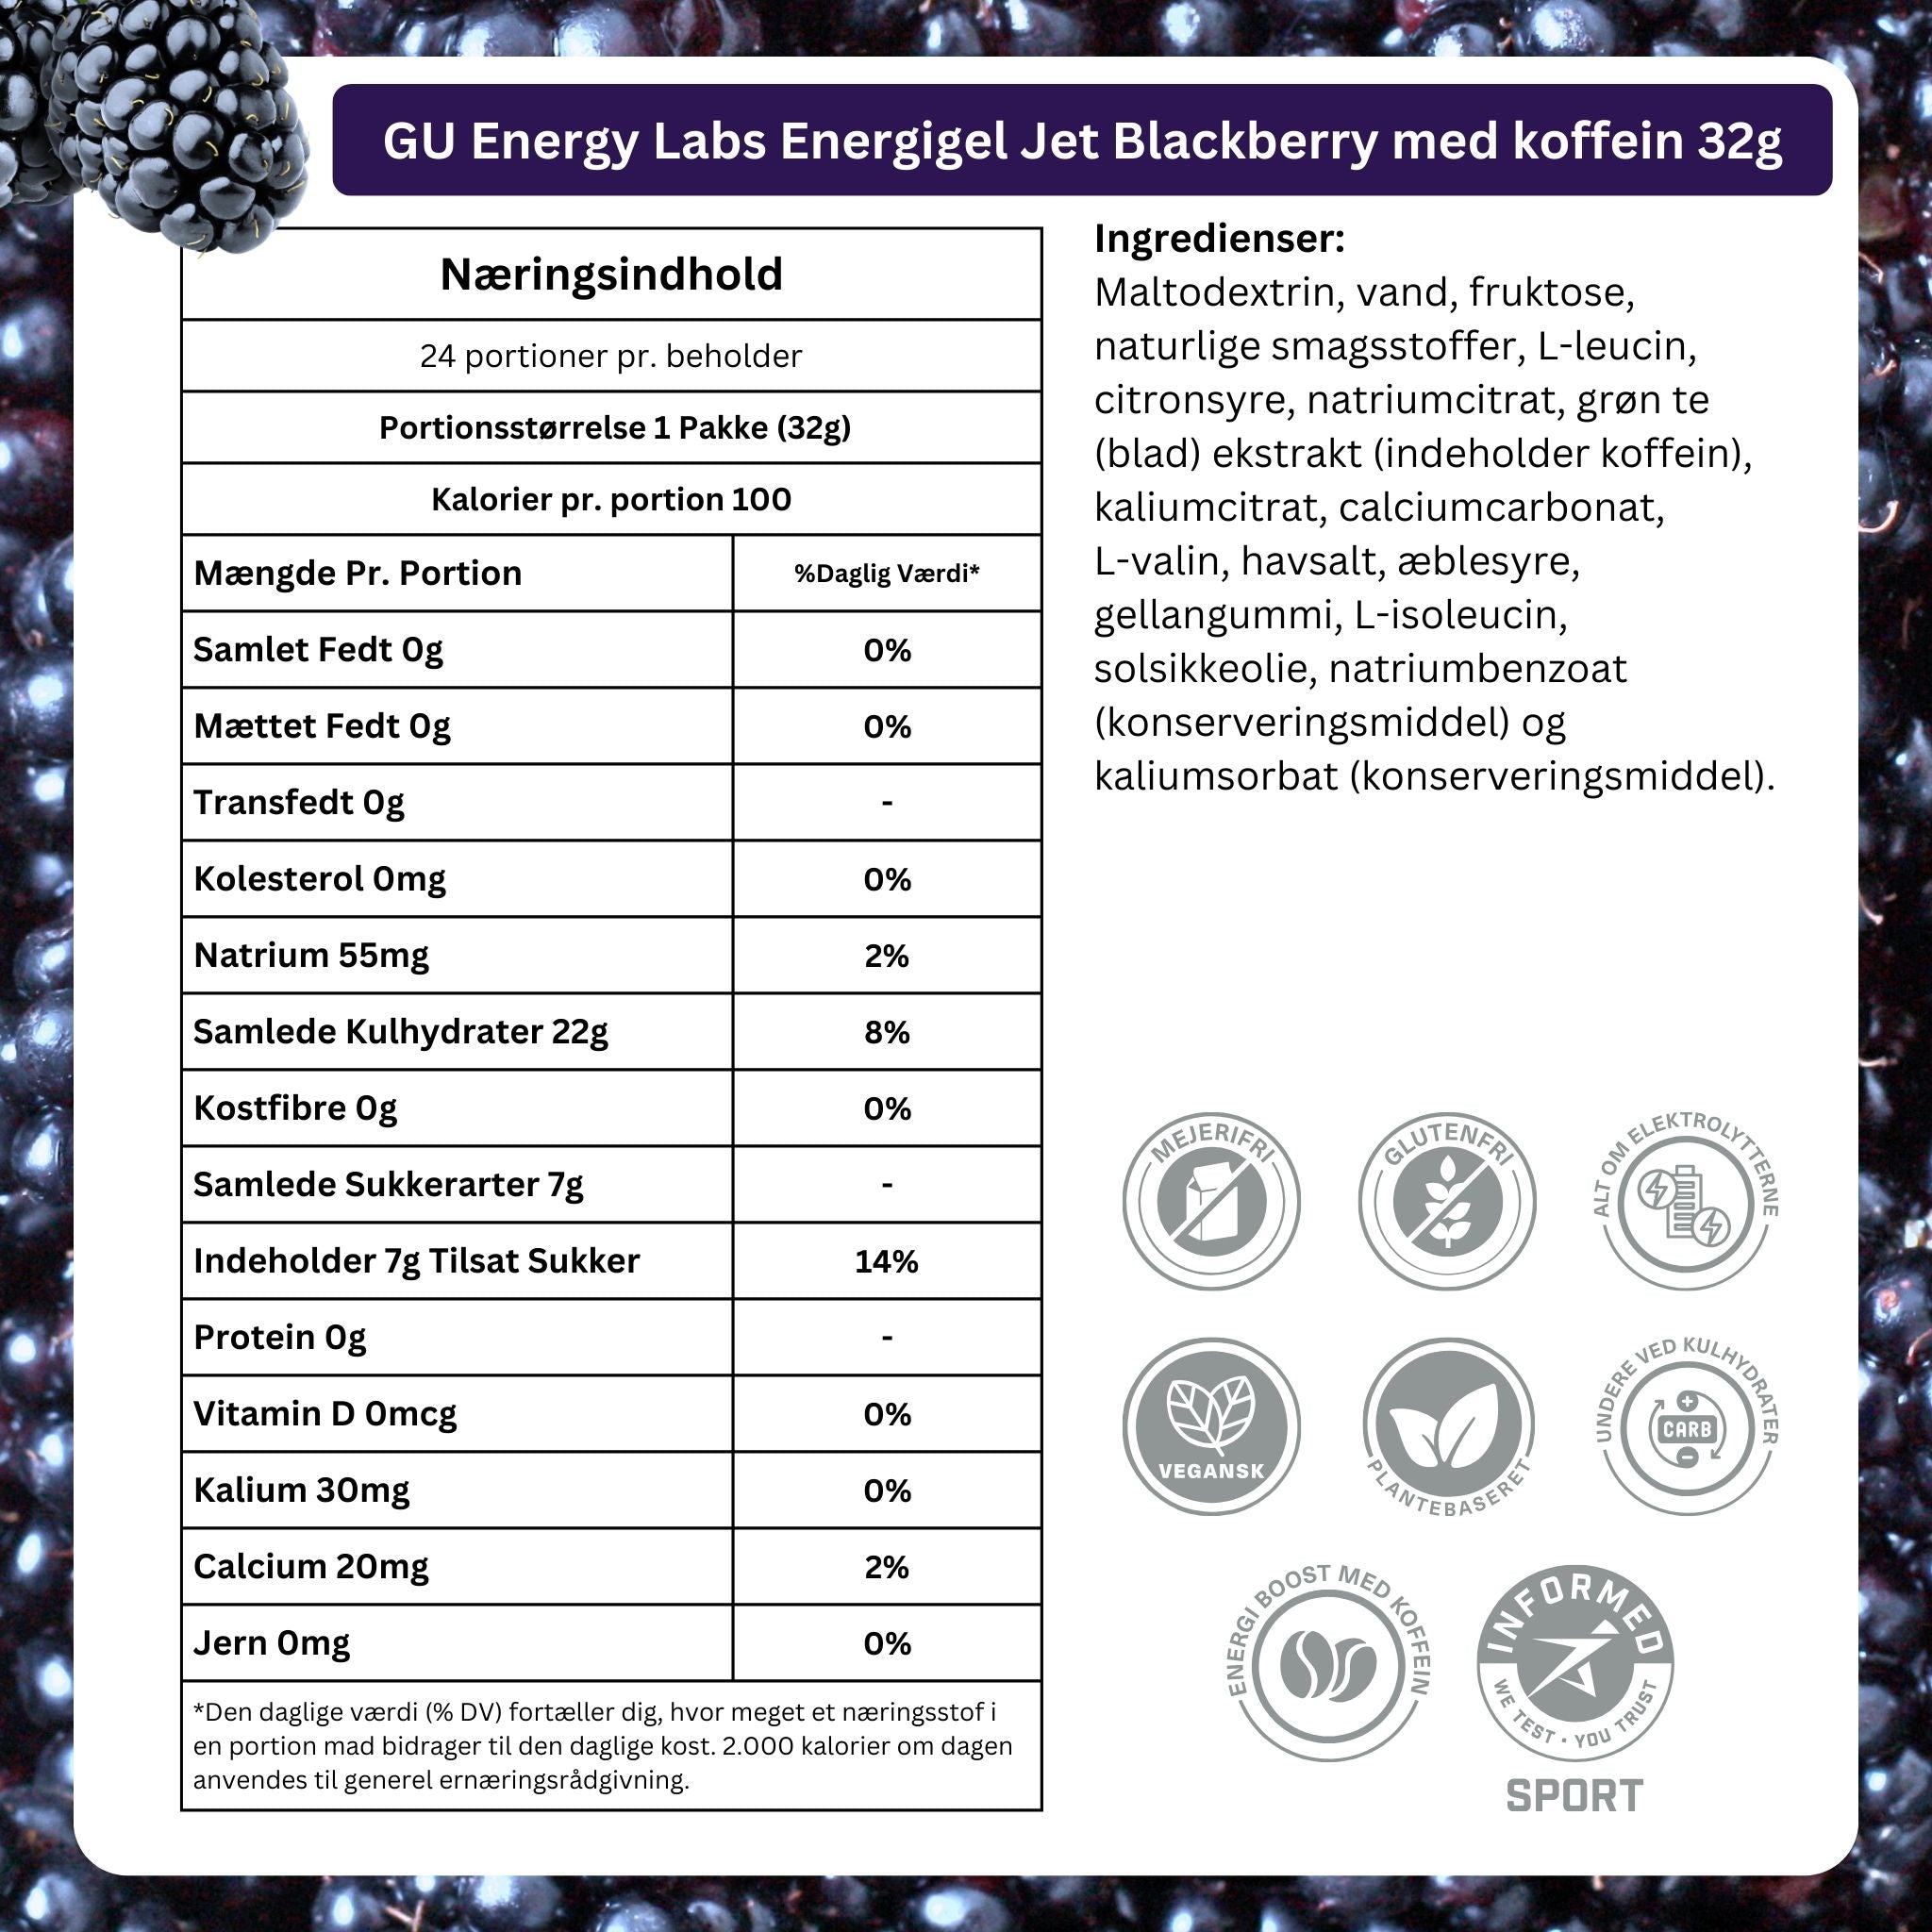 GU Energy Energigel Jet Blackberry med koffein (24 x 32g)